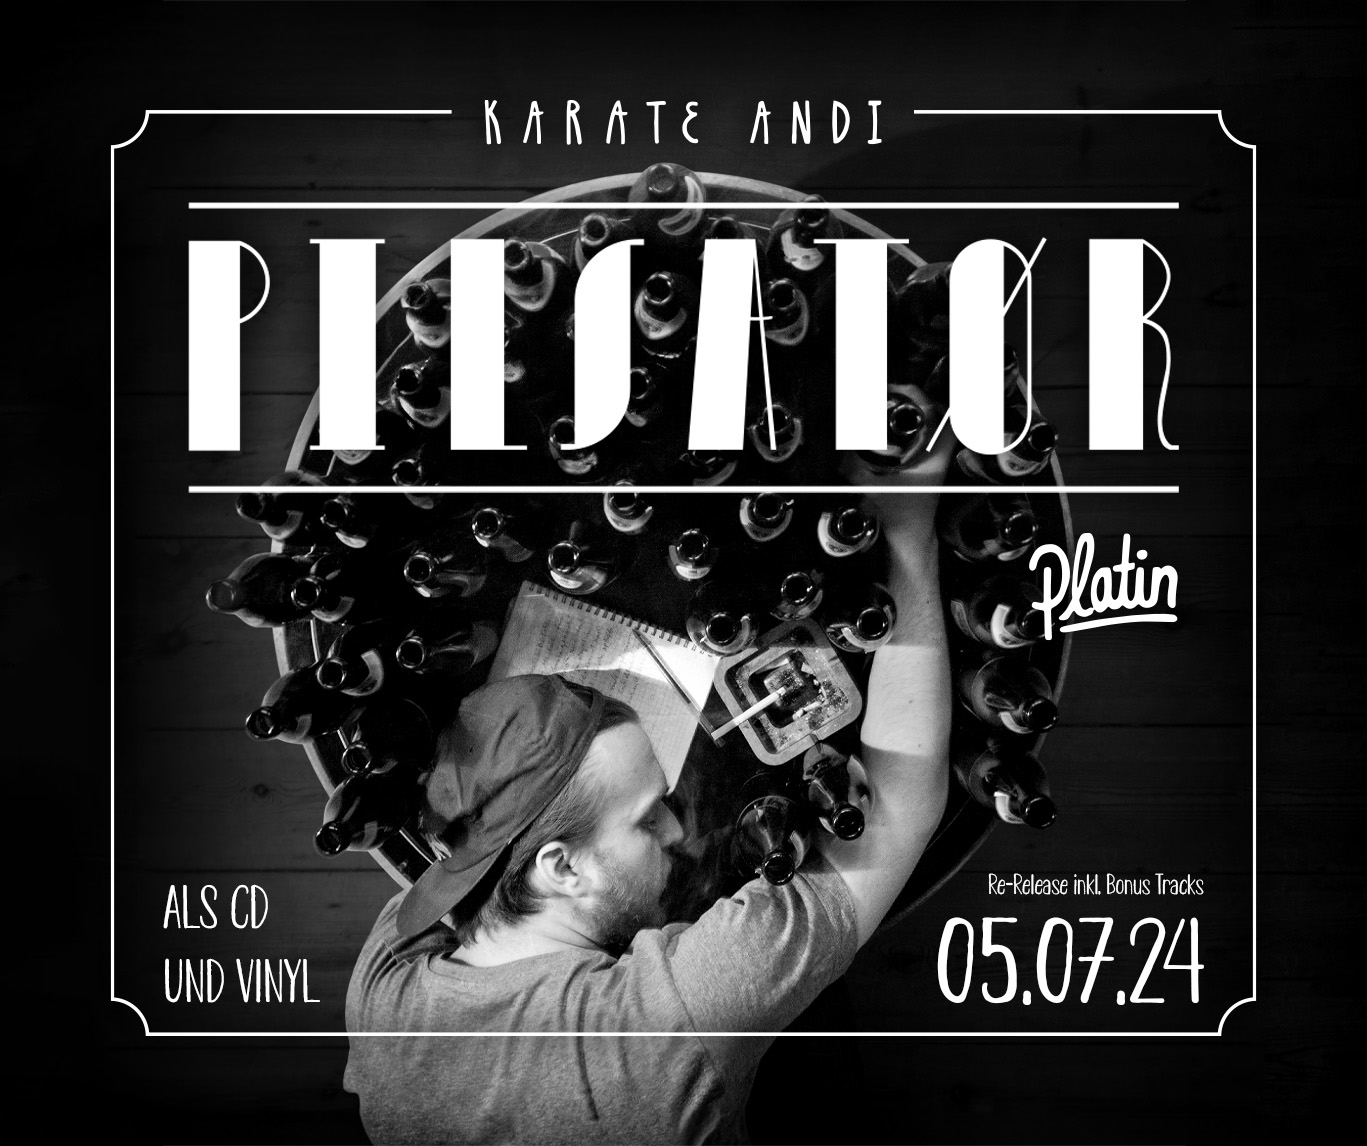 Karate Andi - Pilsator Platin